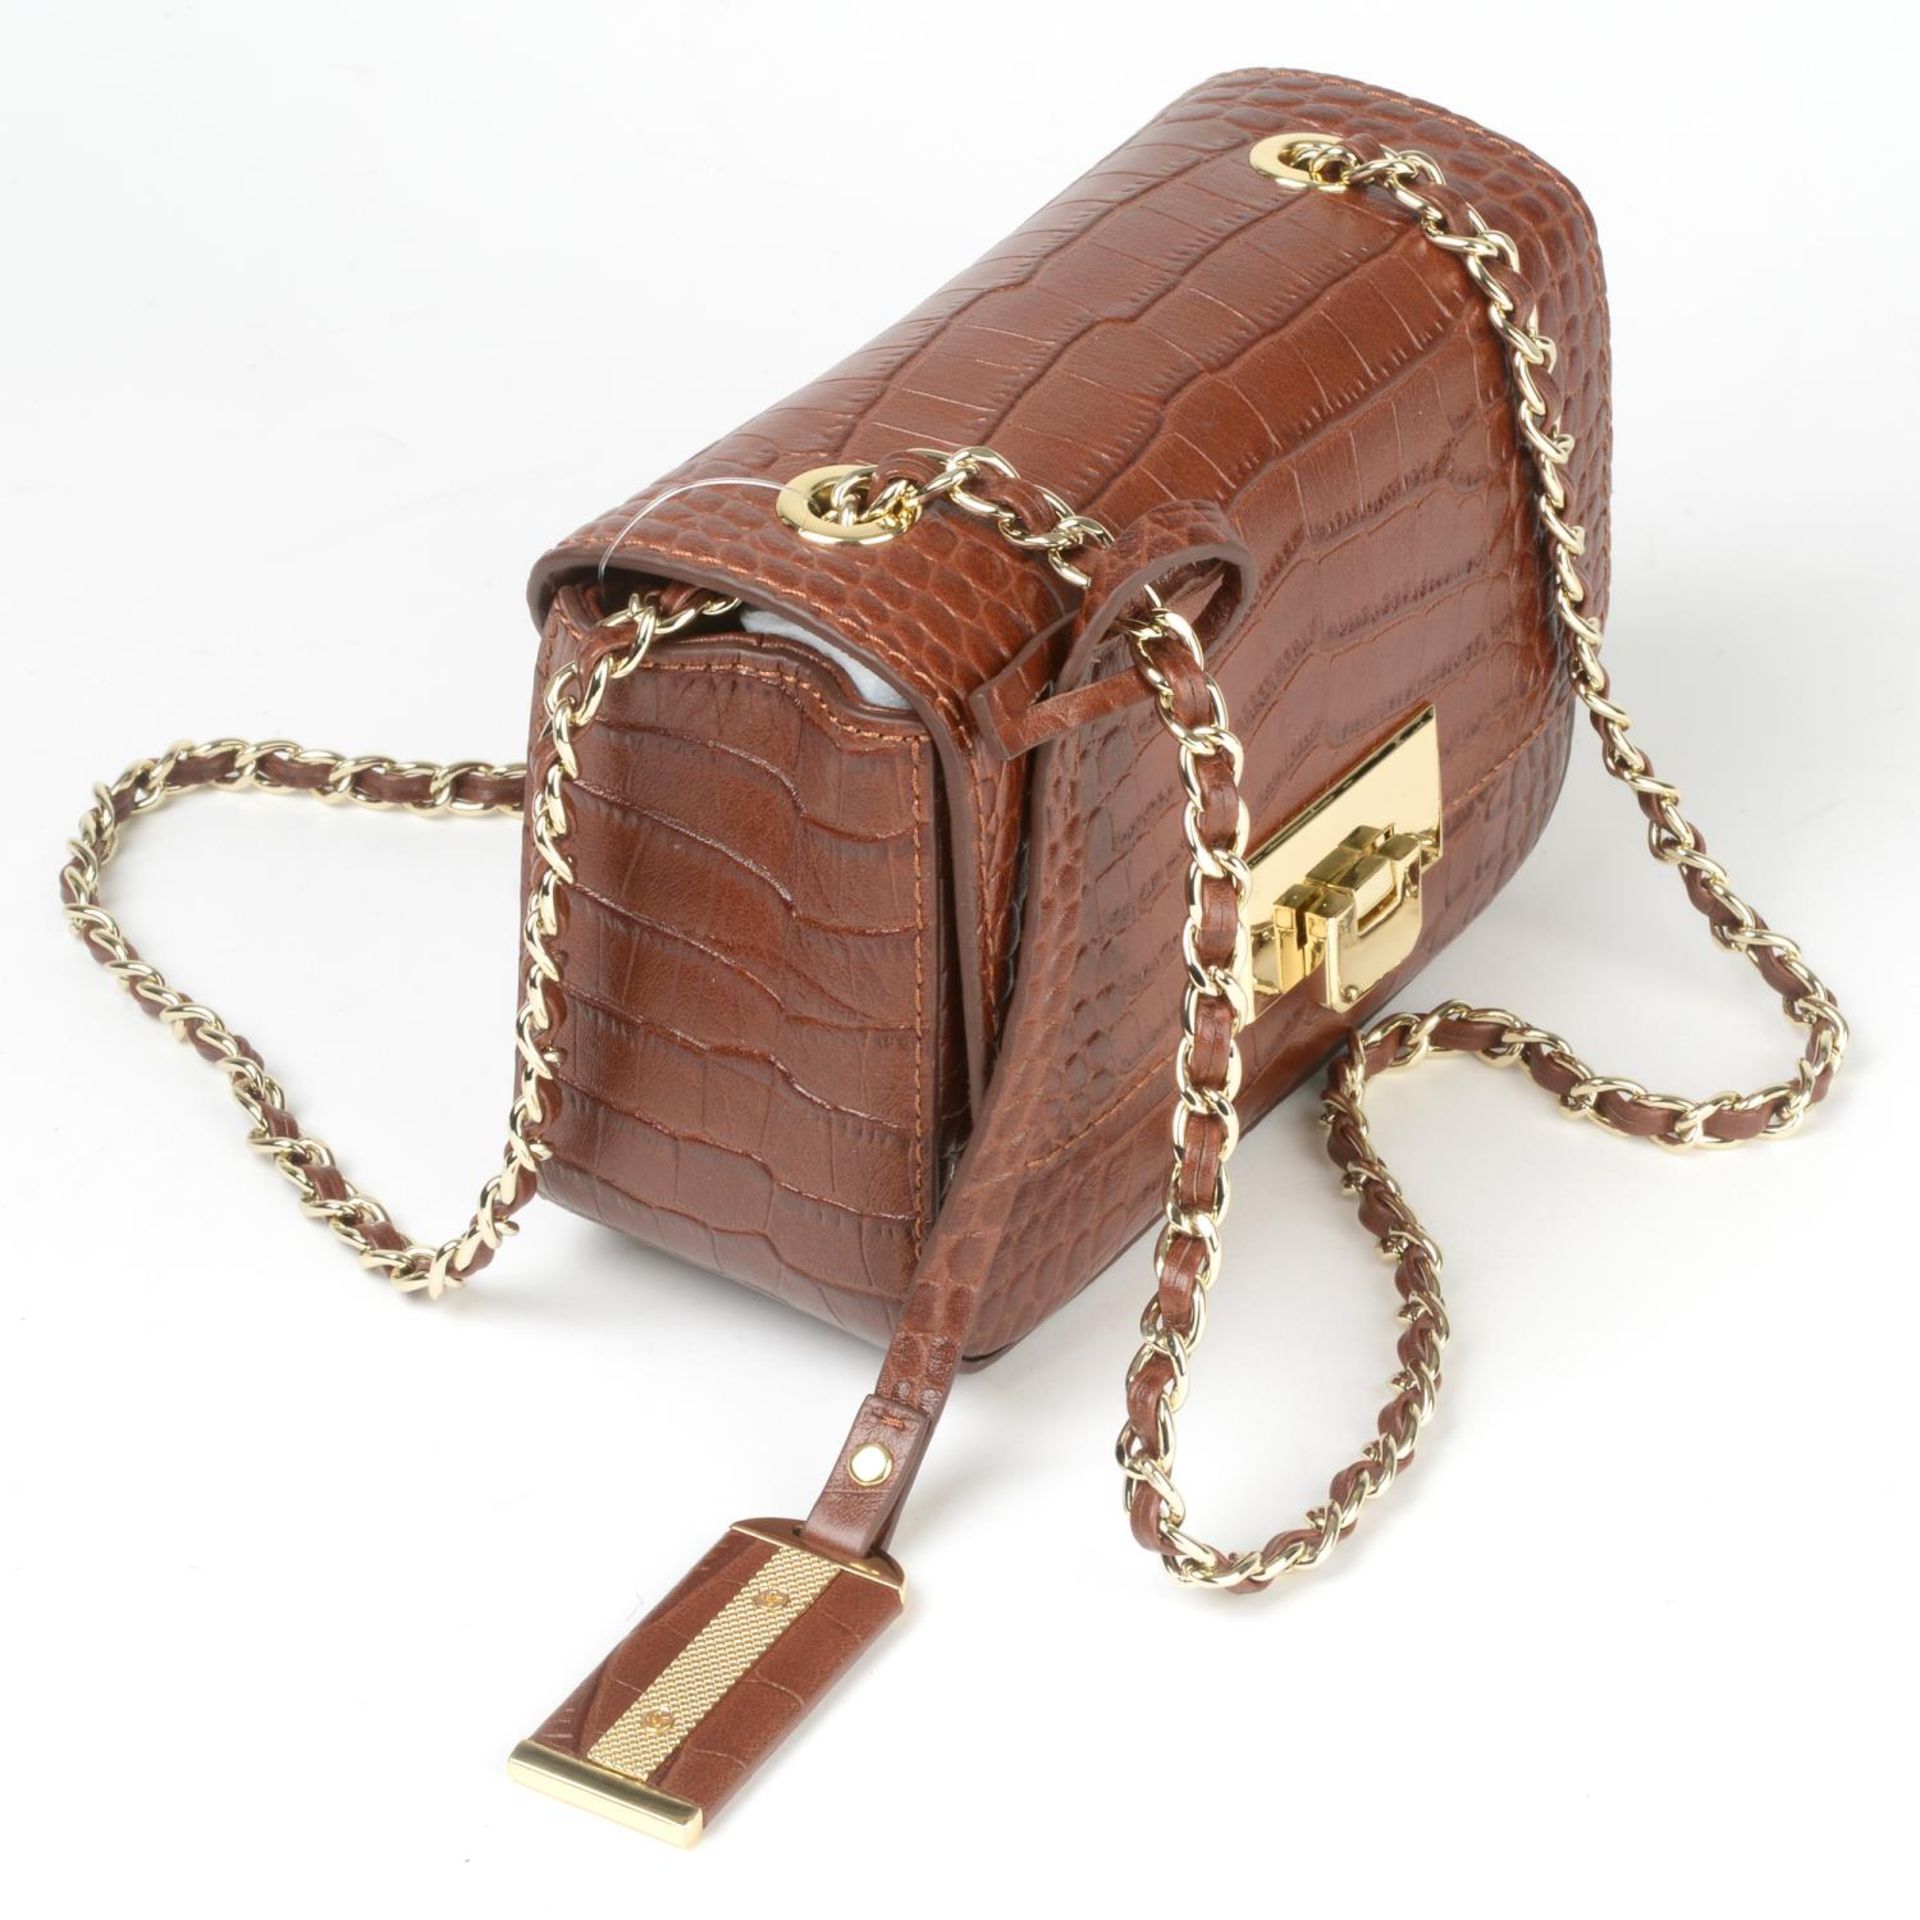 CAVALLO MODA - two leather handbags. - Bild 2 aus 5